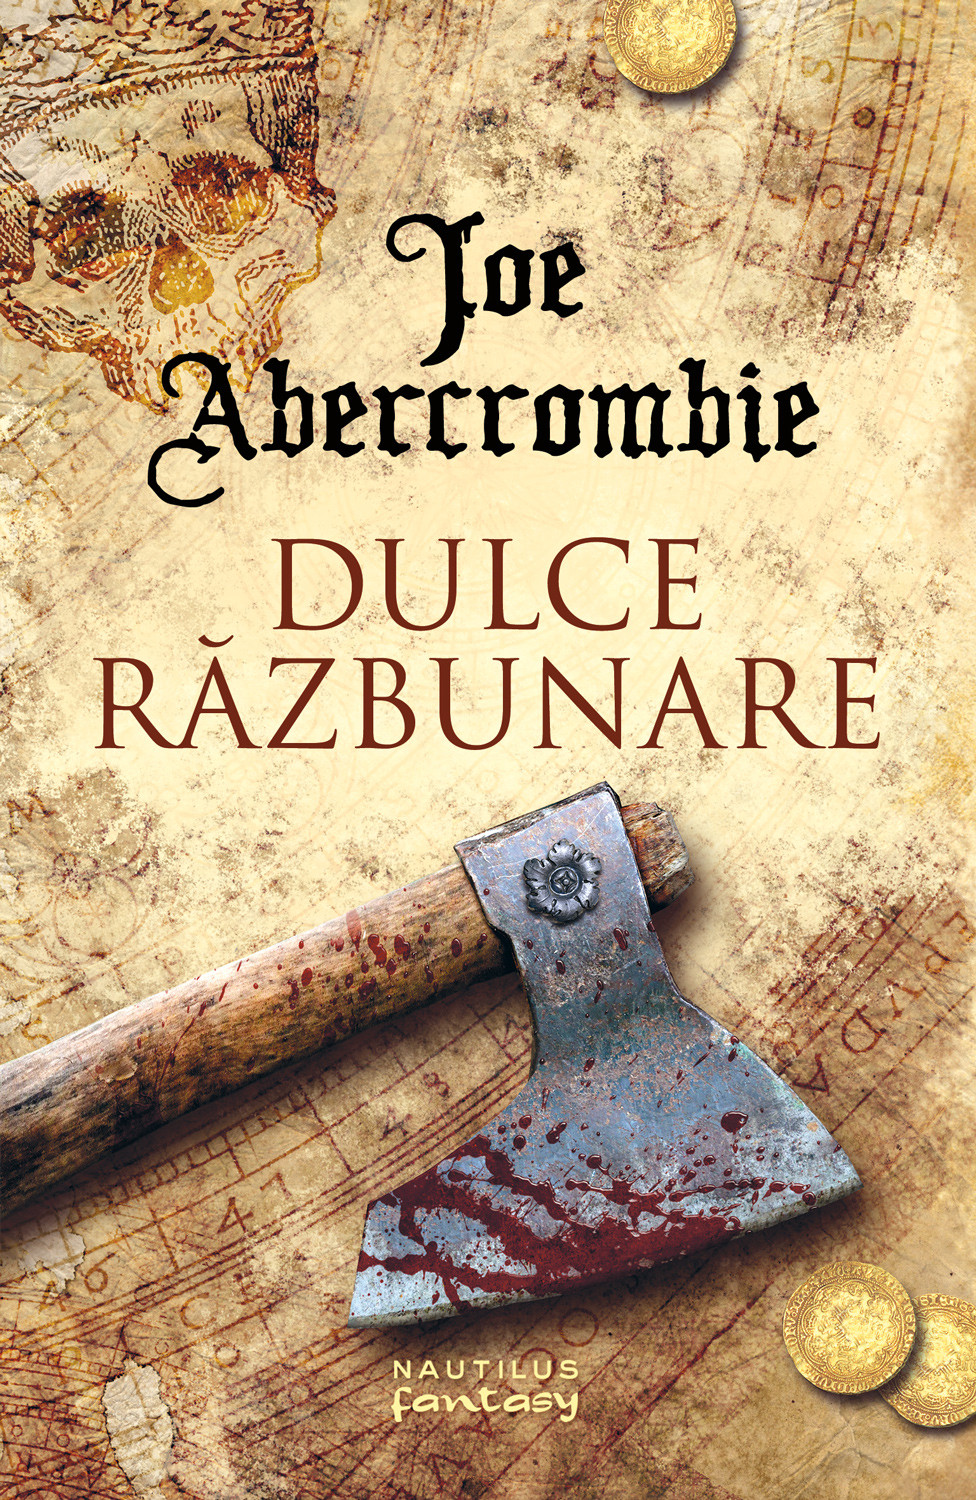 Dulce razbunare | Joe Abercrombie carturesti.ro poza bestsellers.ro